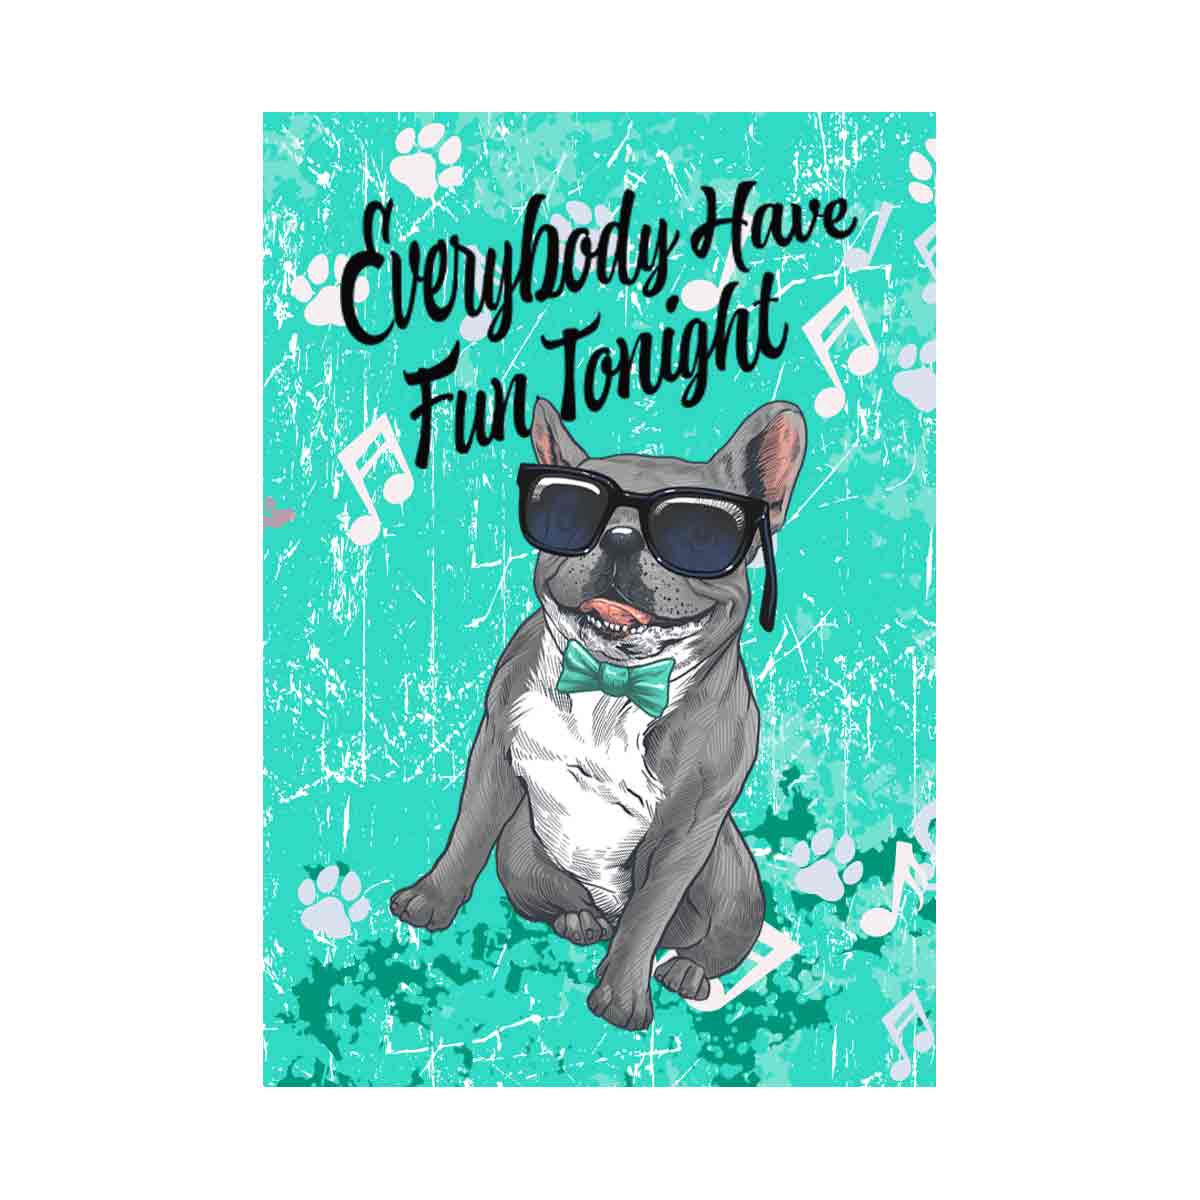 Everybody Have Fun tonight - dog